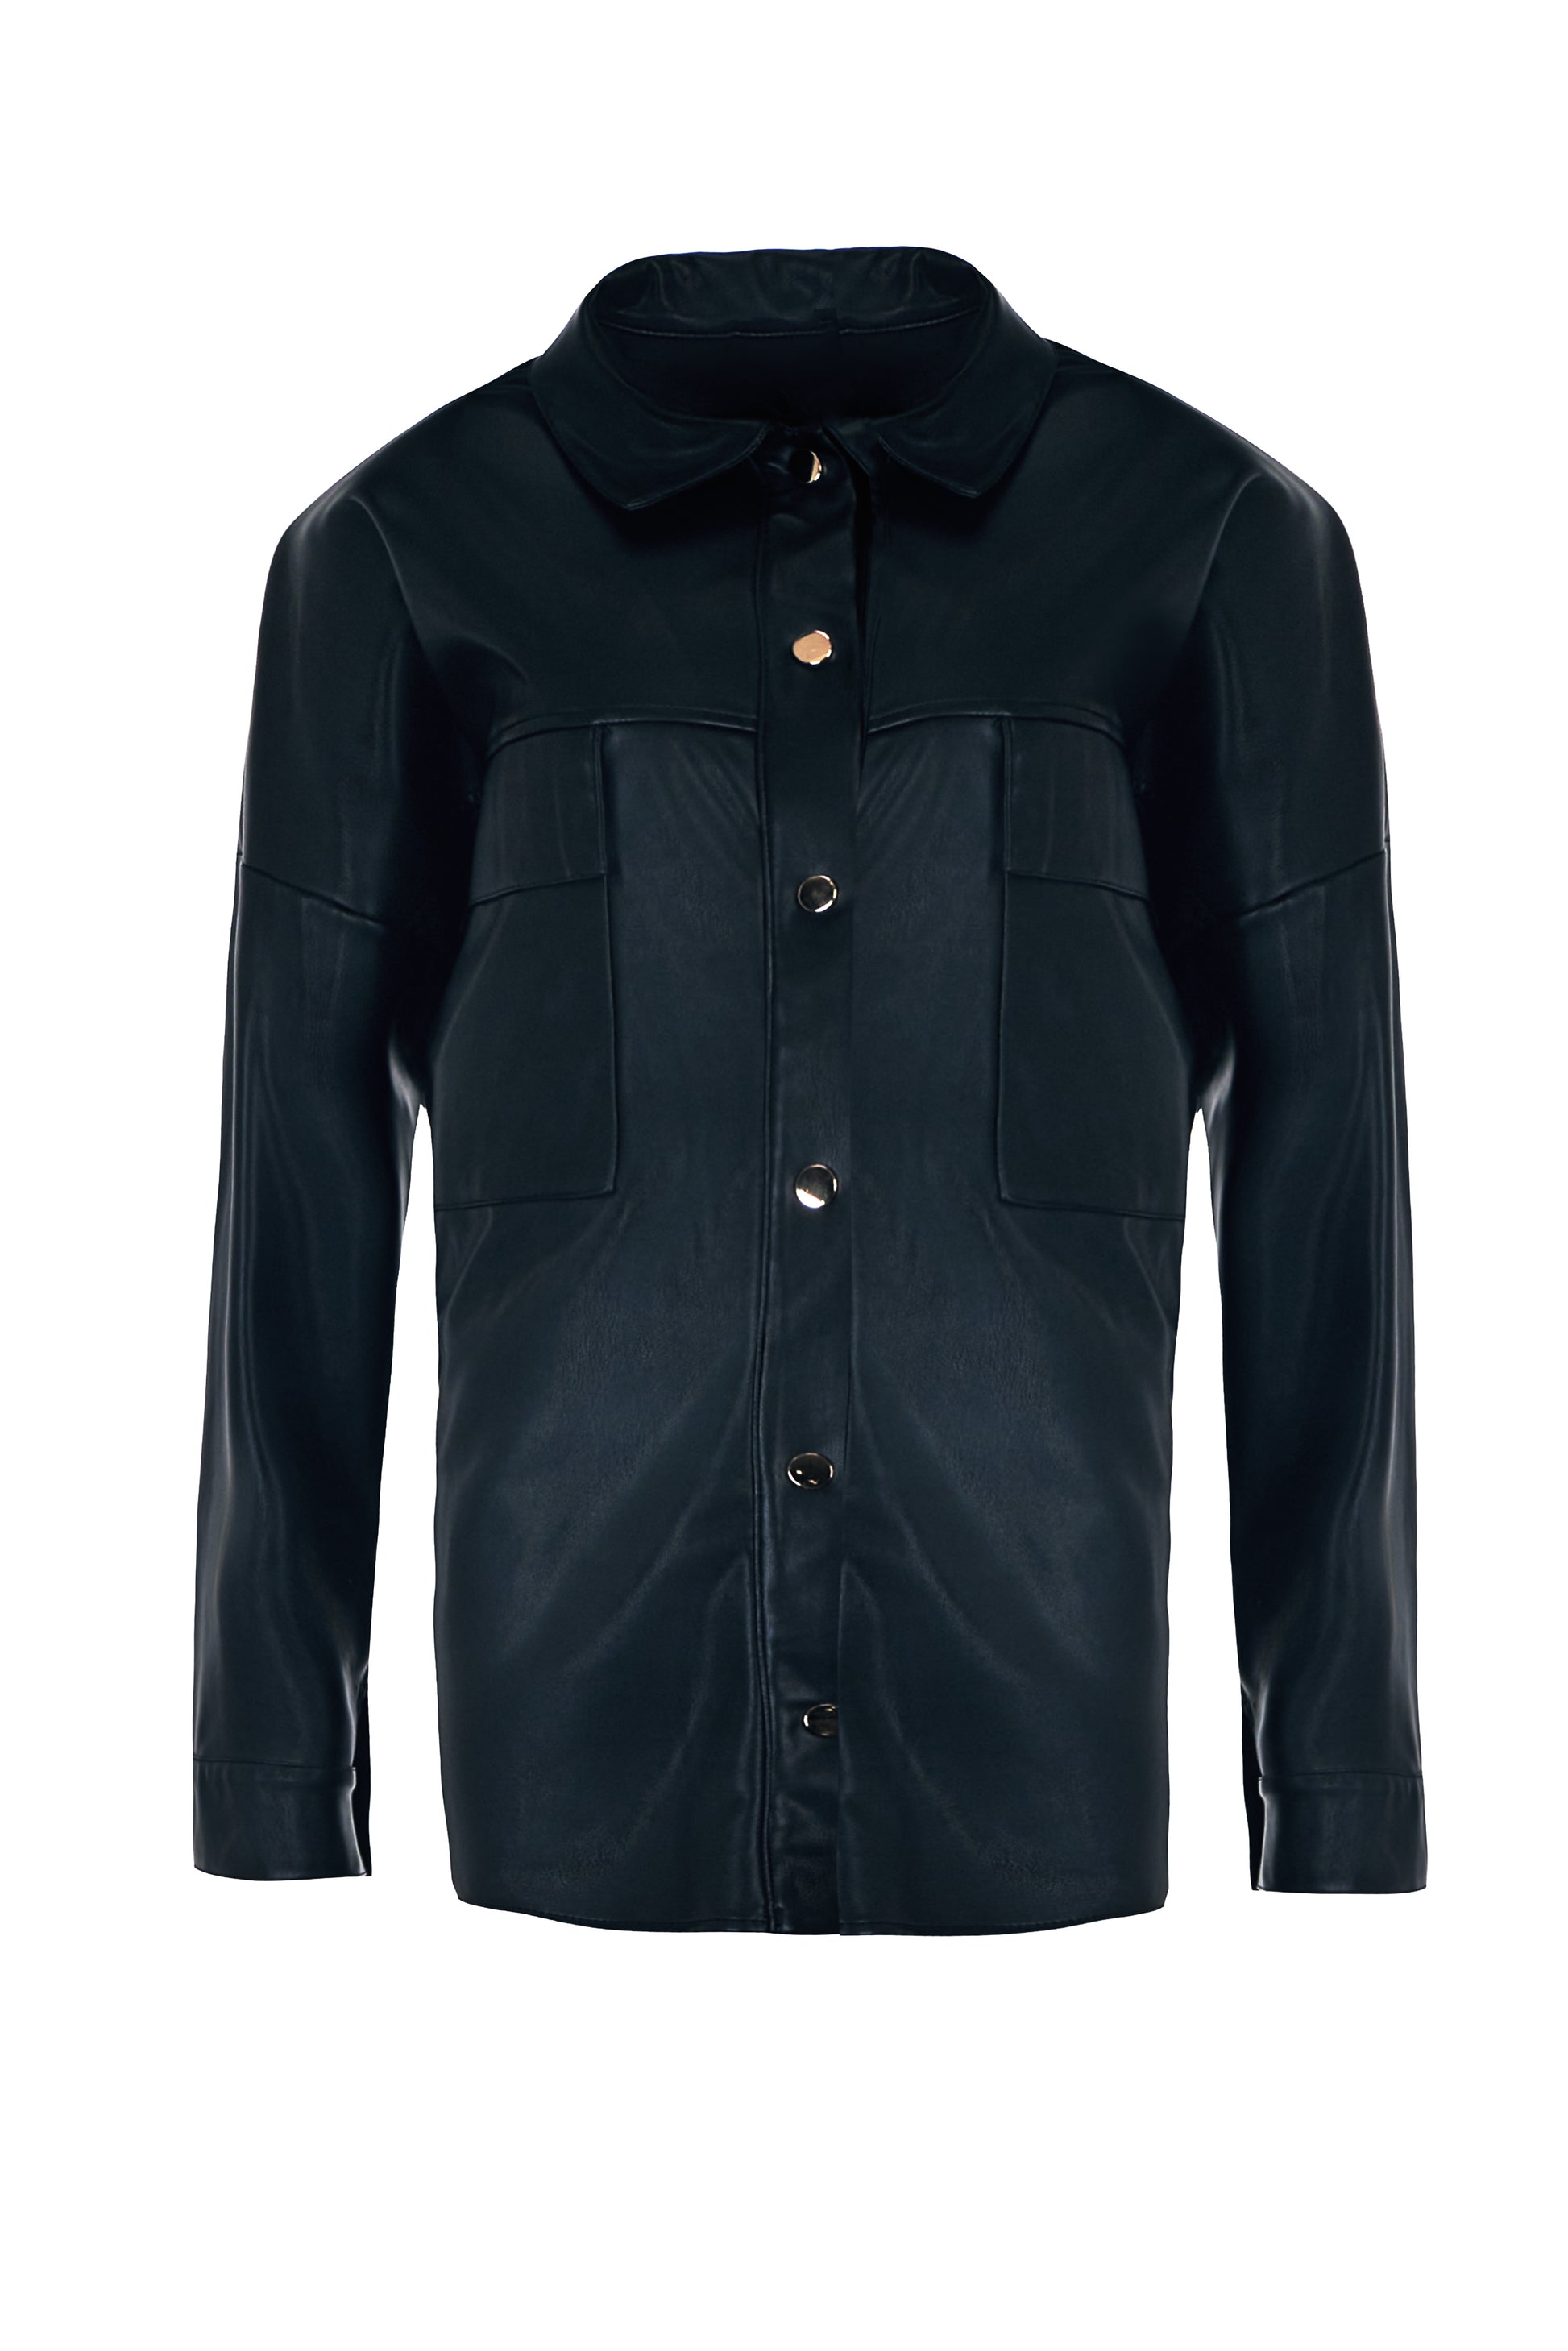 Leather Collared Long Sleeve Shirt Jacket